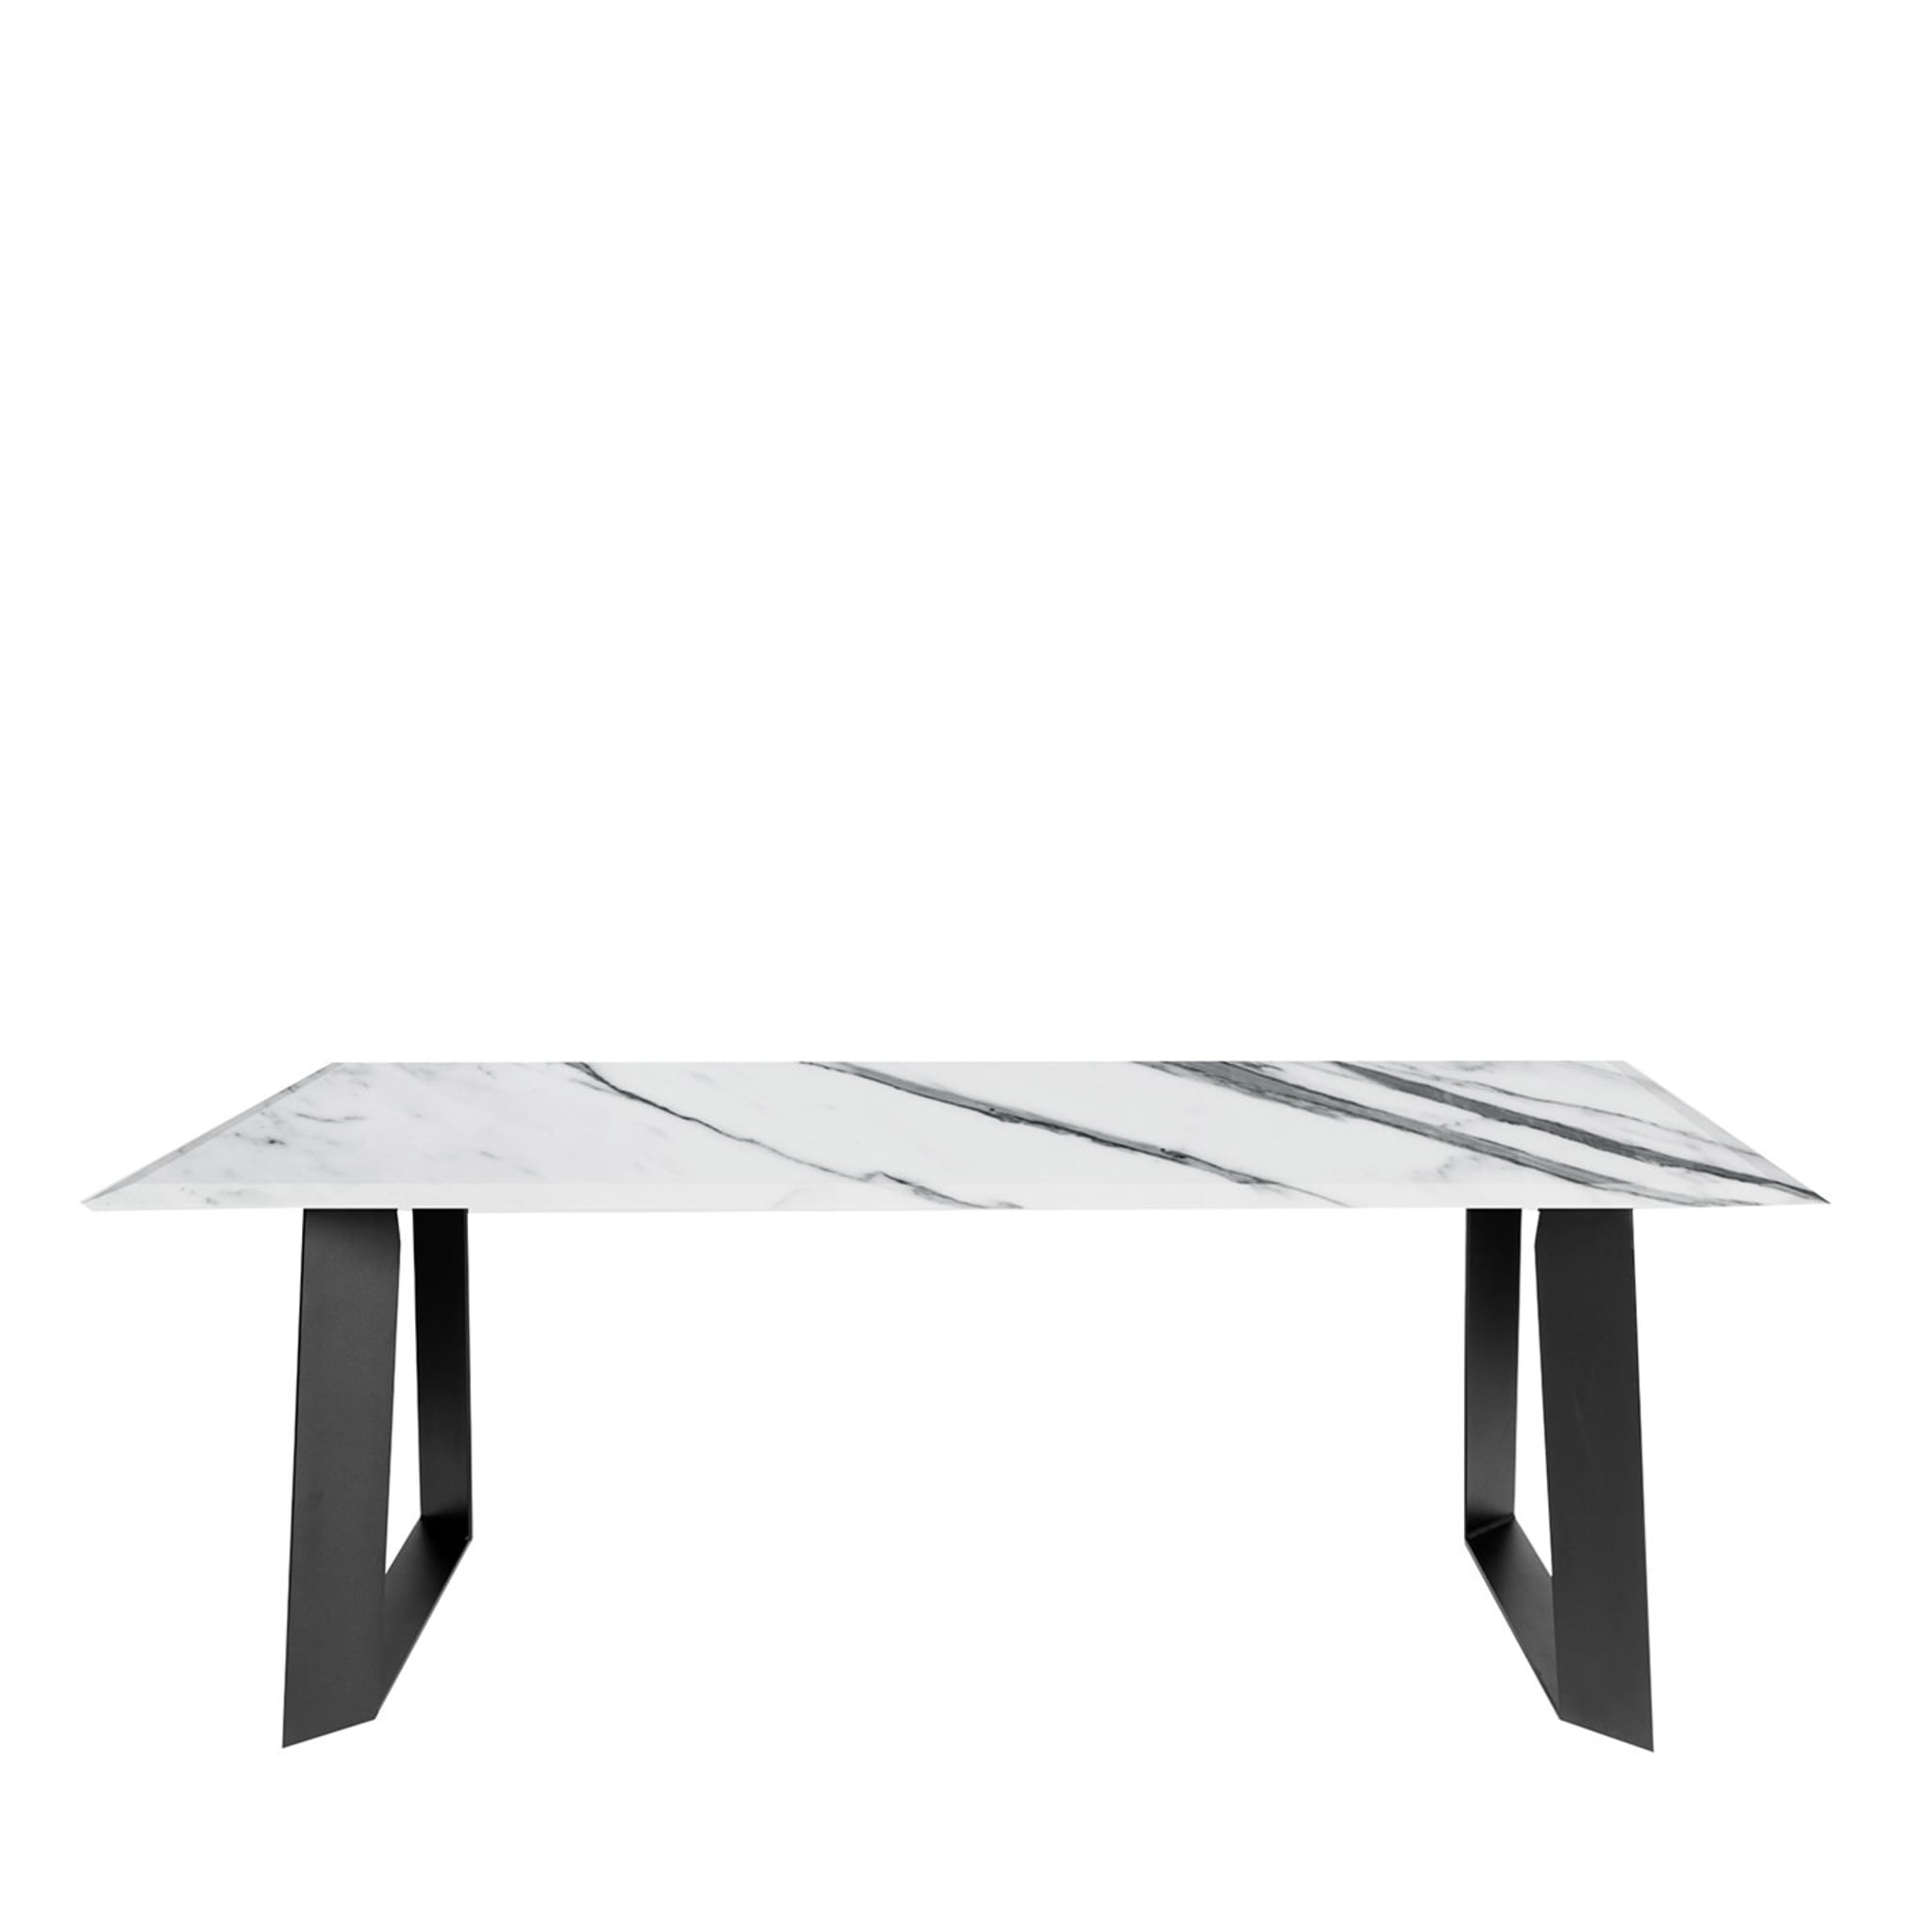 Domino Carrara Dining Table - Alternative view 1